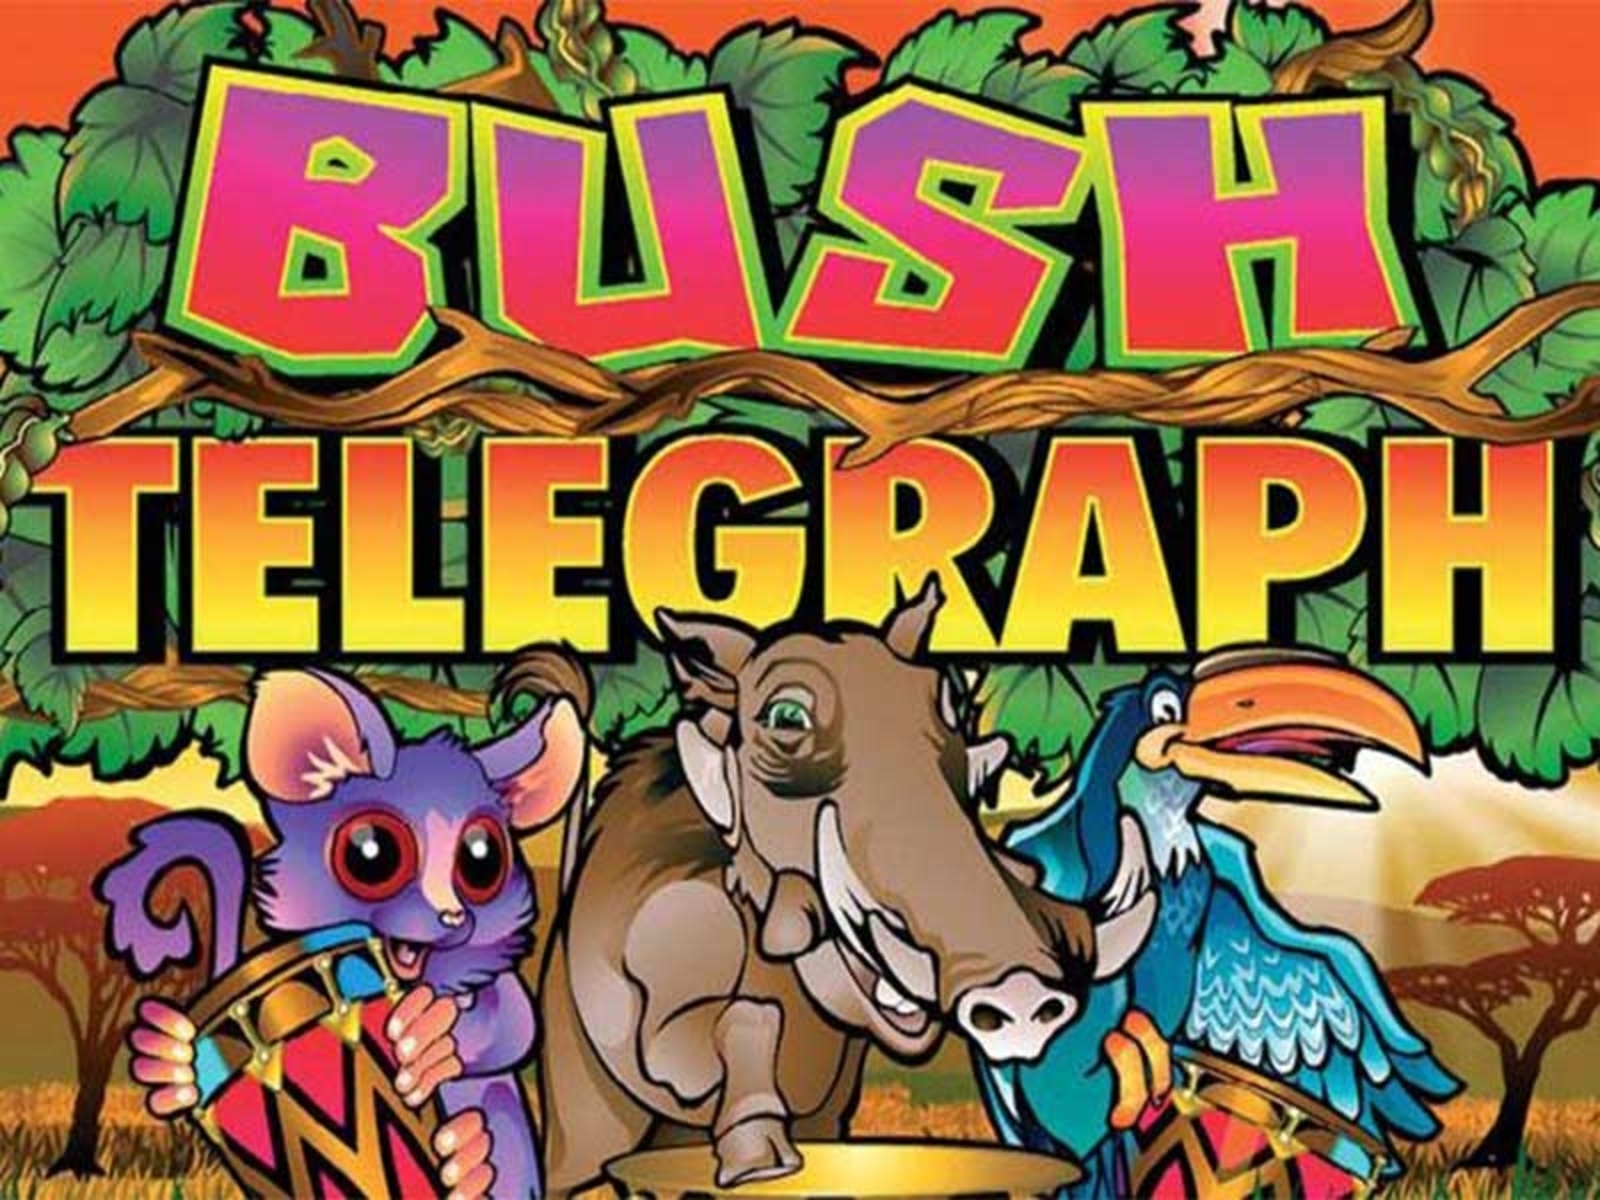 Bush Telegraph demo